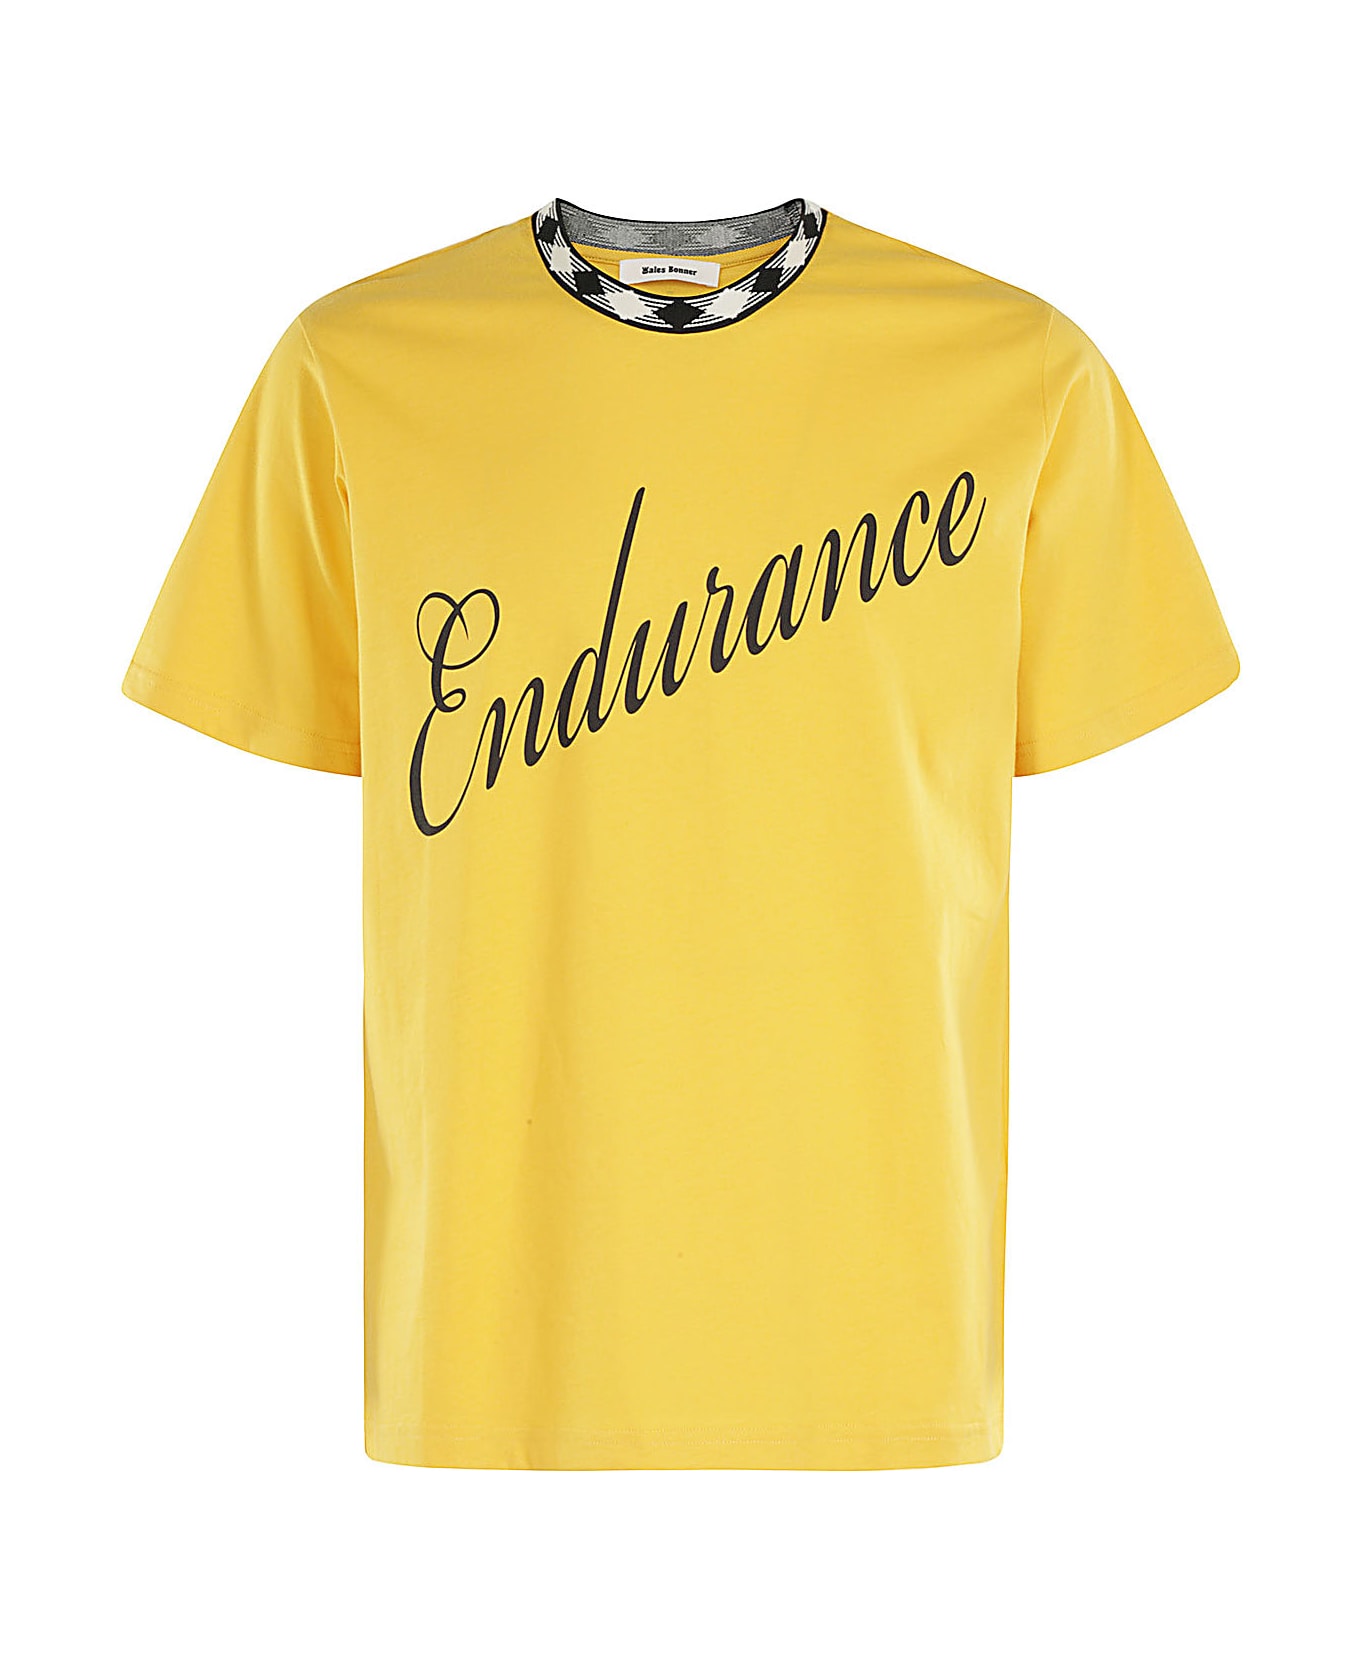 Wales Bonner Endurance T Shirt - Turmeric